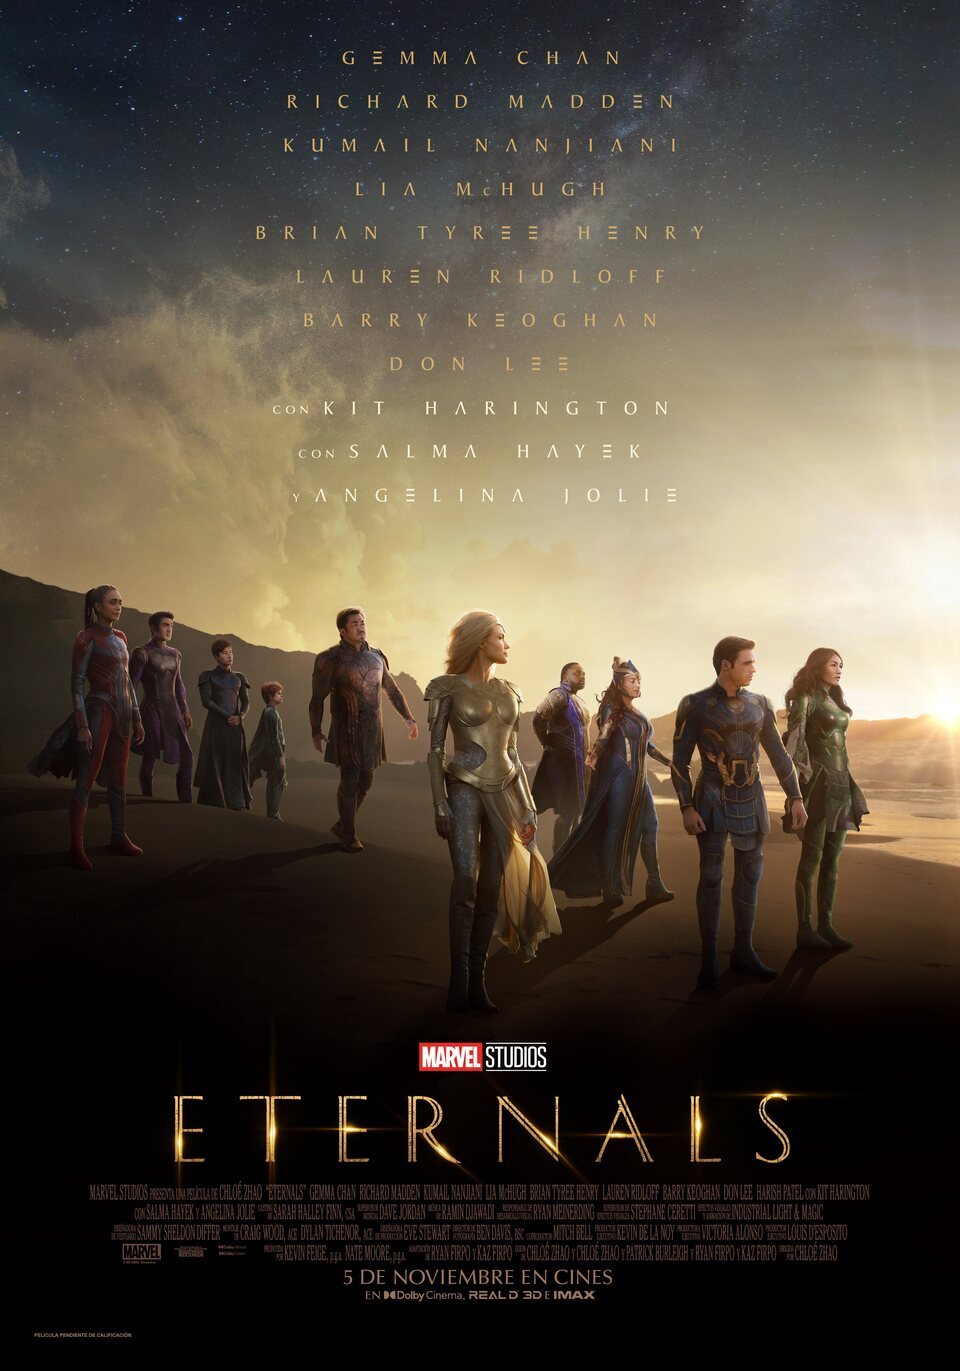 España poster for Eternals